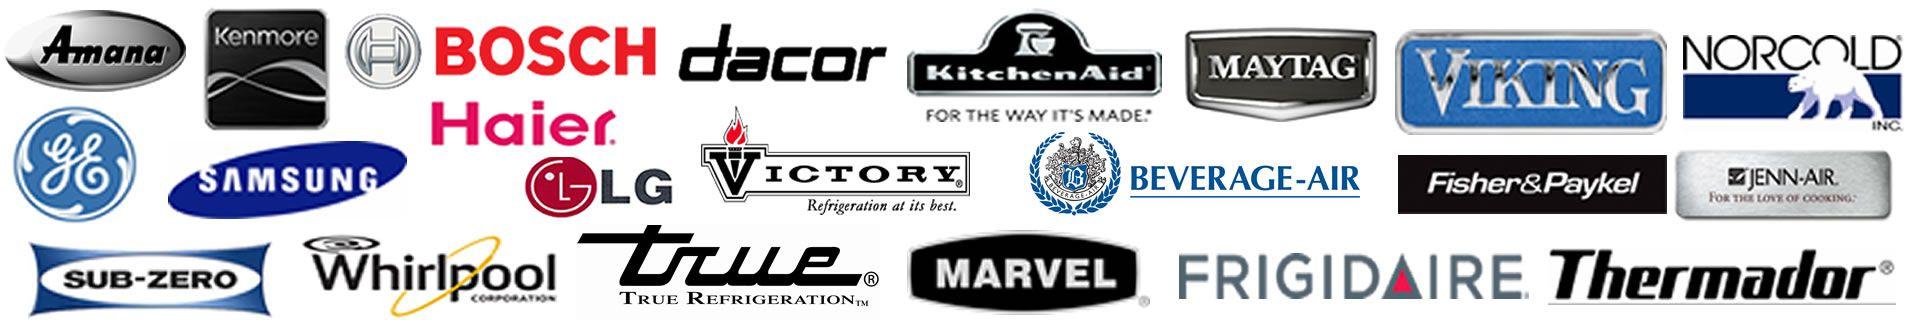 Maytag Refrigeration Logo - Any Appliance Repair Co. | Any Appliance Repair Co.in San Mateo